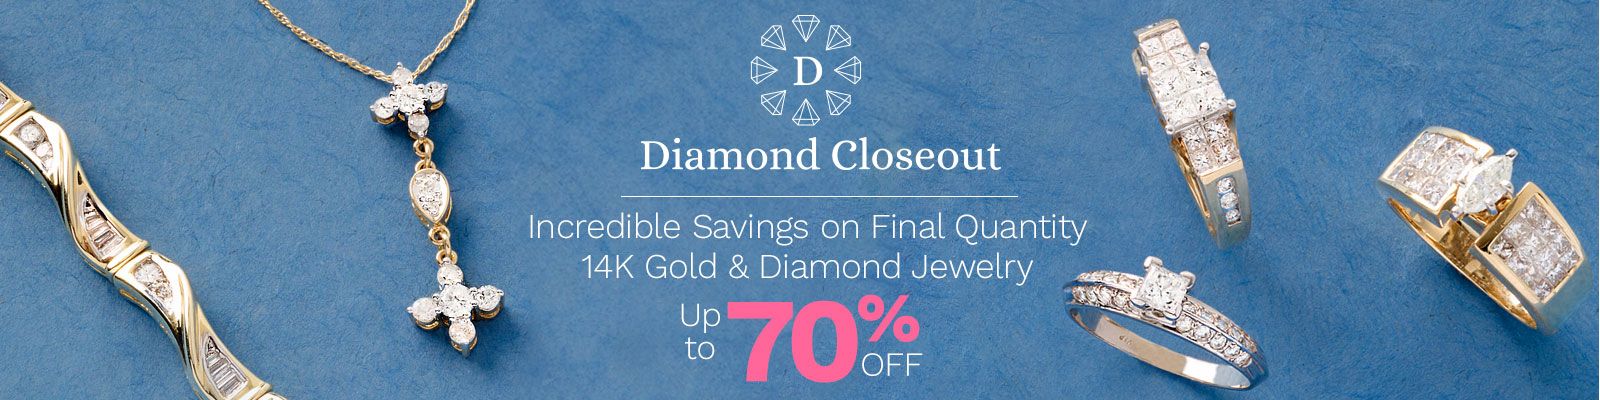 Diamond Closeout |  Incredible Savings on Final Quantity 14K Gold & Diamond Jewelry  Up to 70% Off 211-394 211-378 211-391